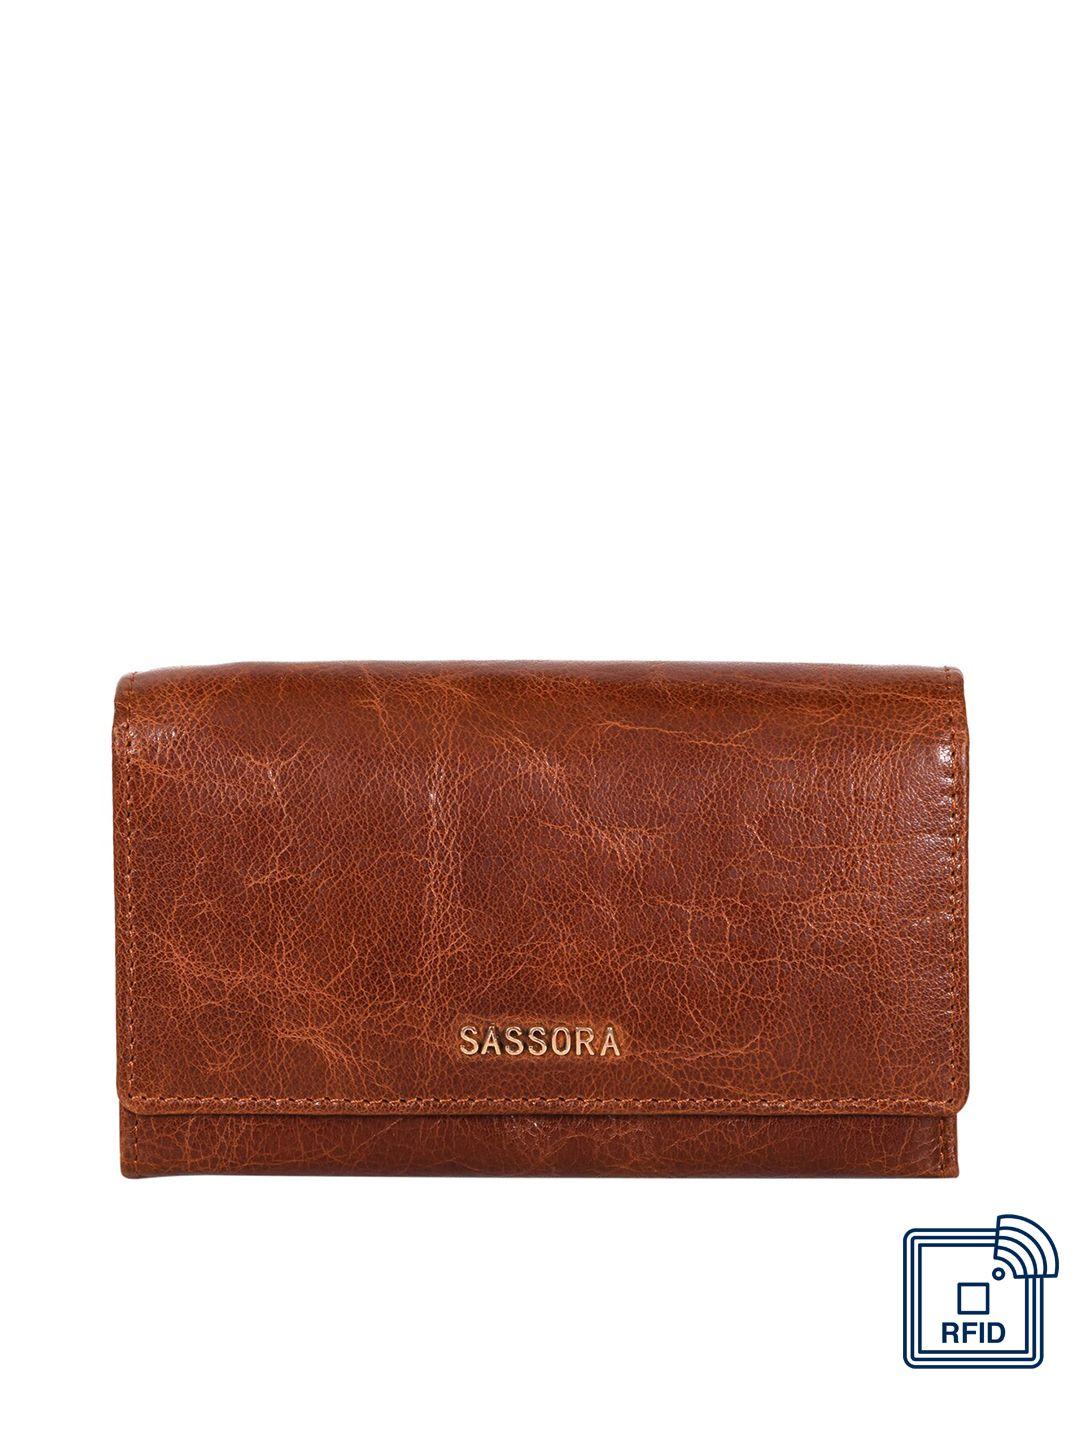 sassora women textured leather envelope purse